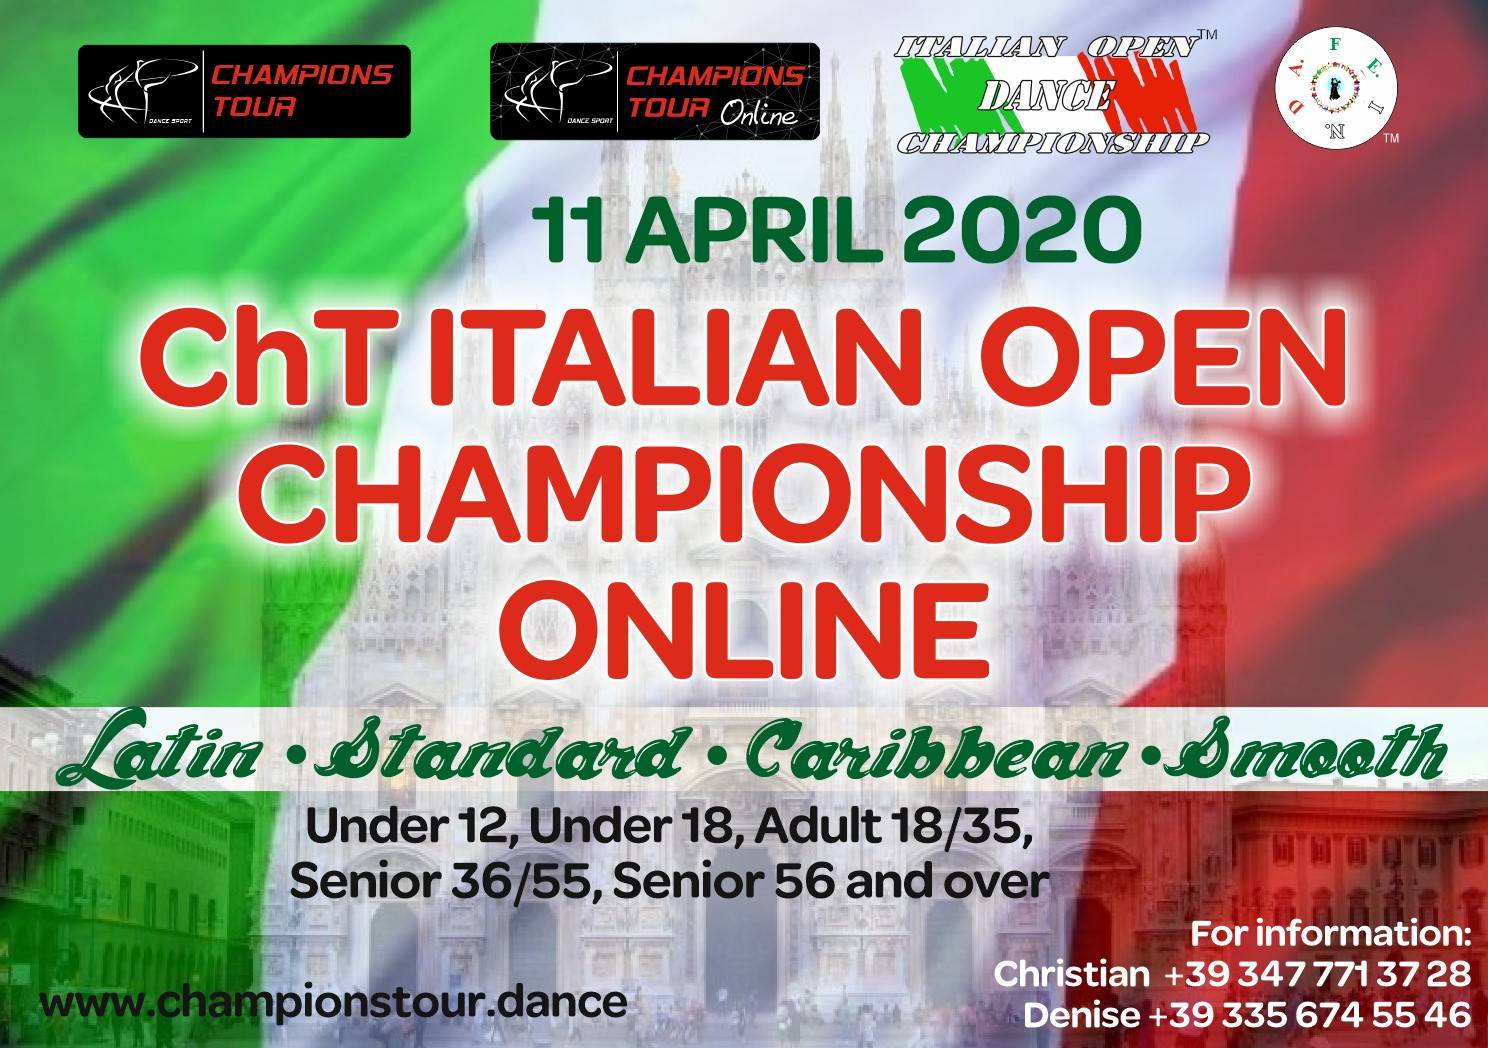 ChT Italian Open Championship Online